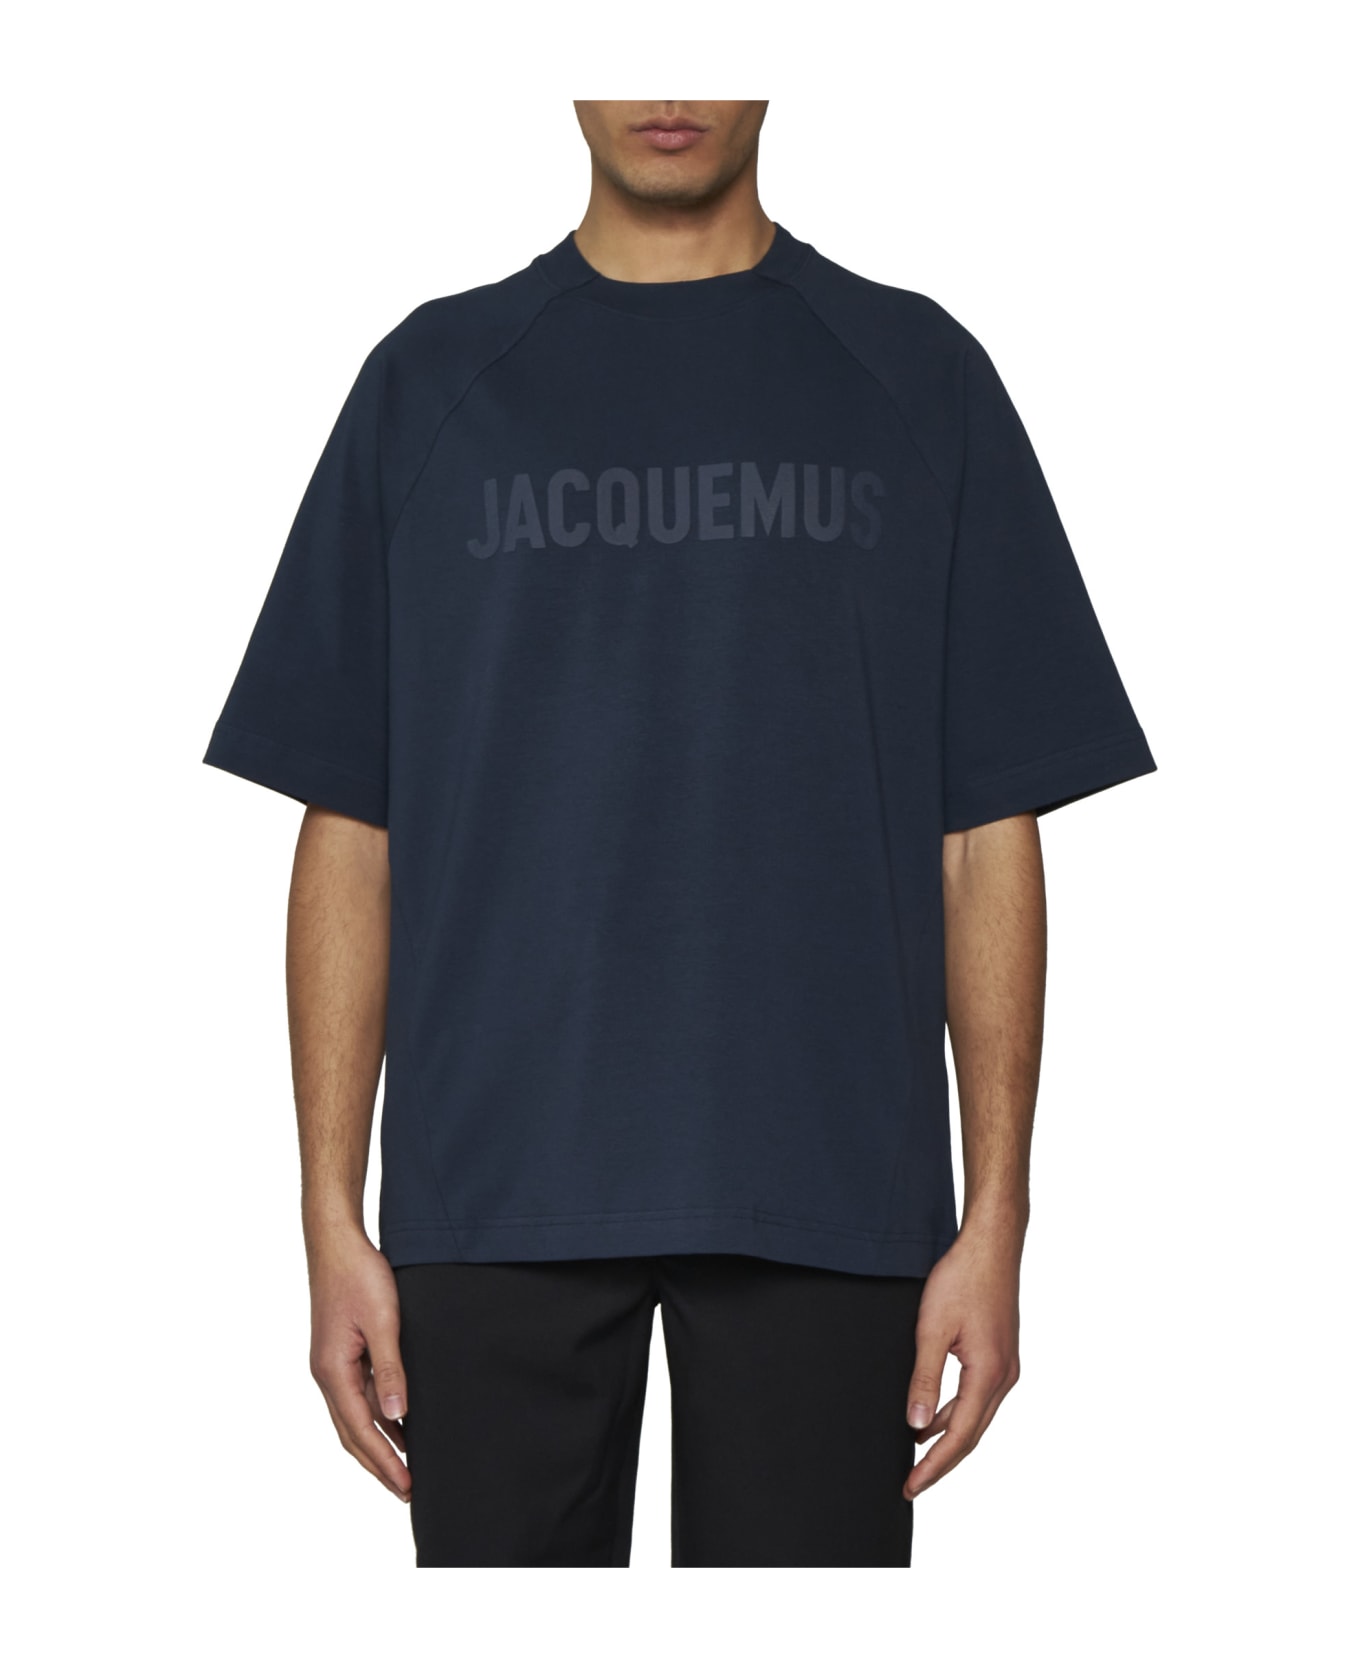 Jacquemus Typo Crewneck T-shirt - Dark navy シャツ